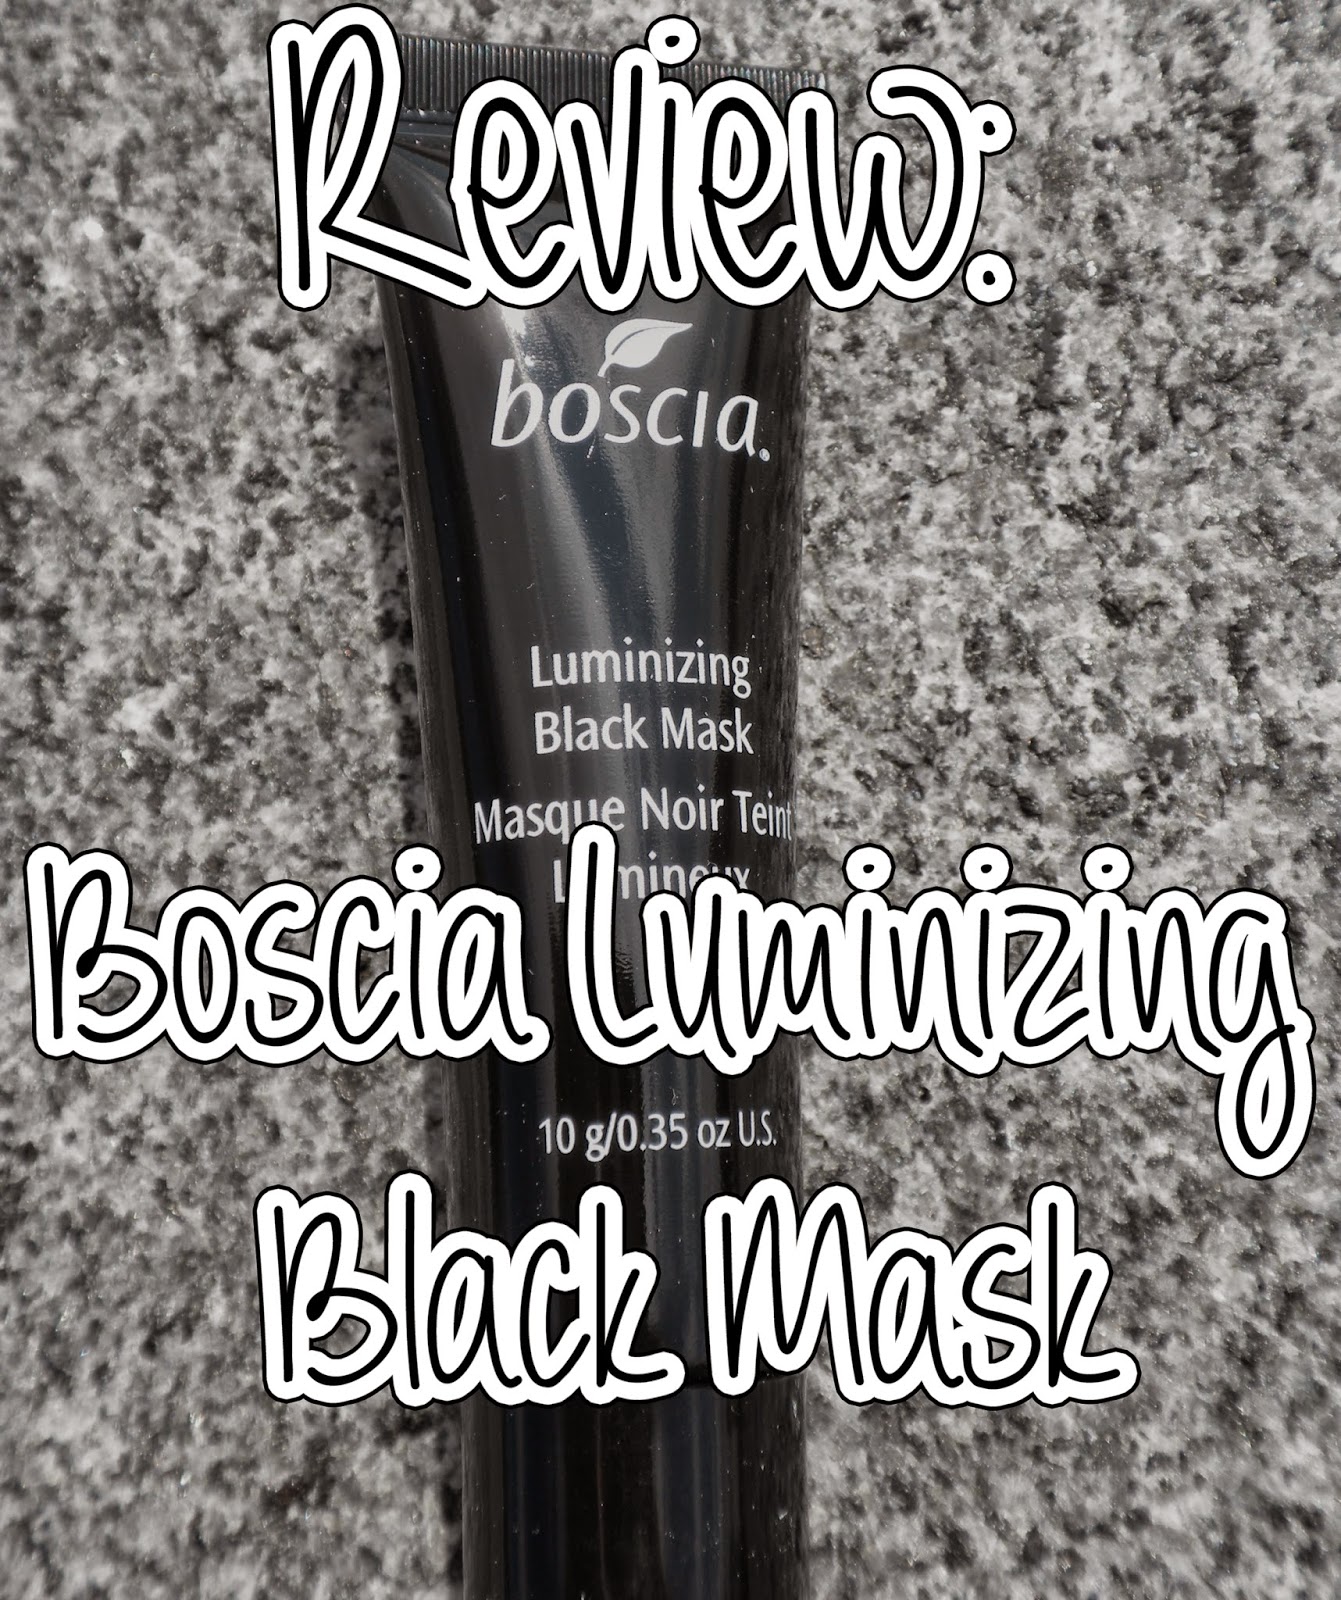 TVstation Tak support Sammi the Beauty Buff: Review: Boscia Luminizing Black Mask